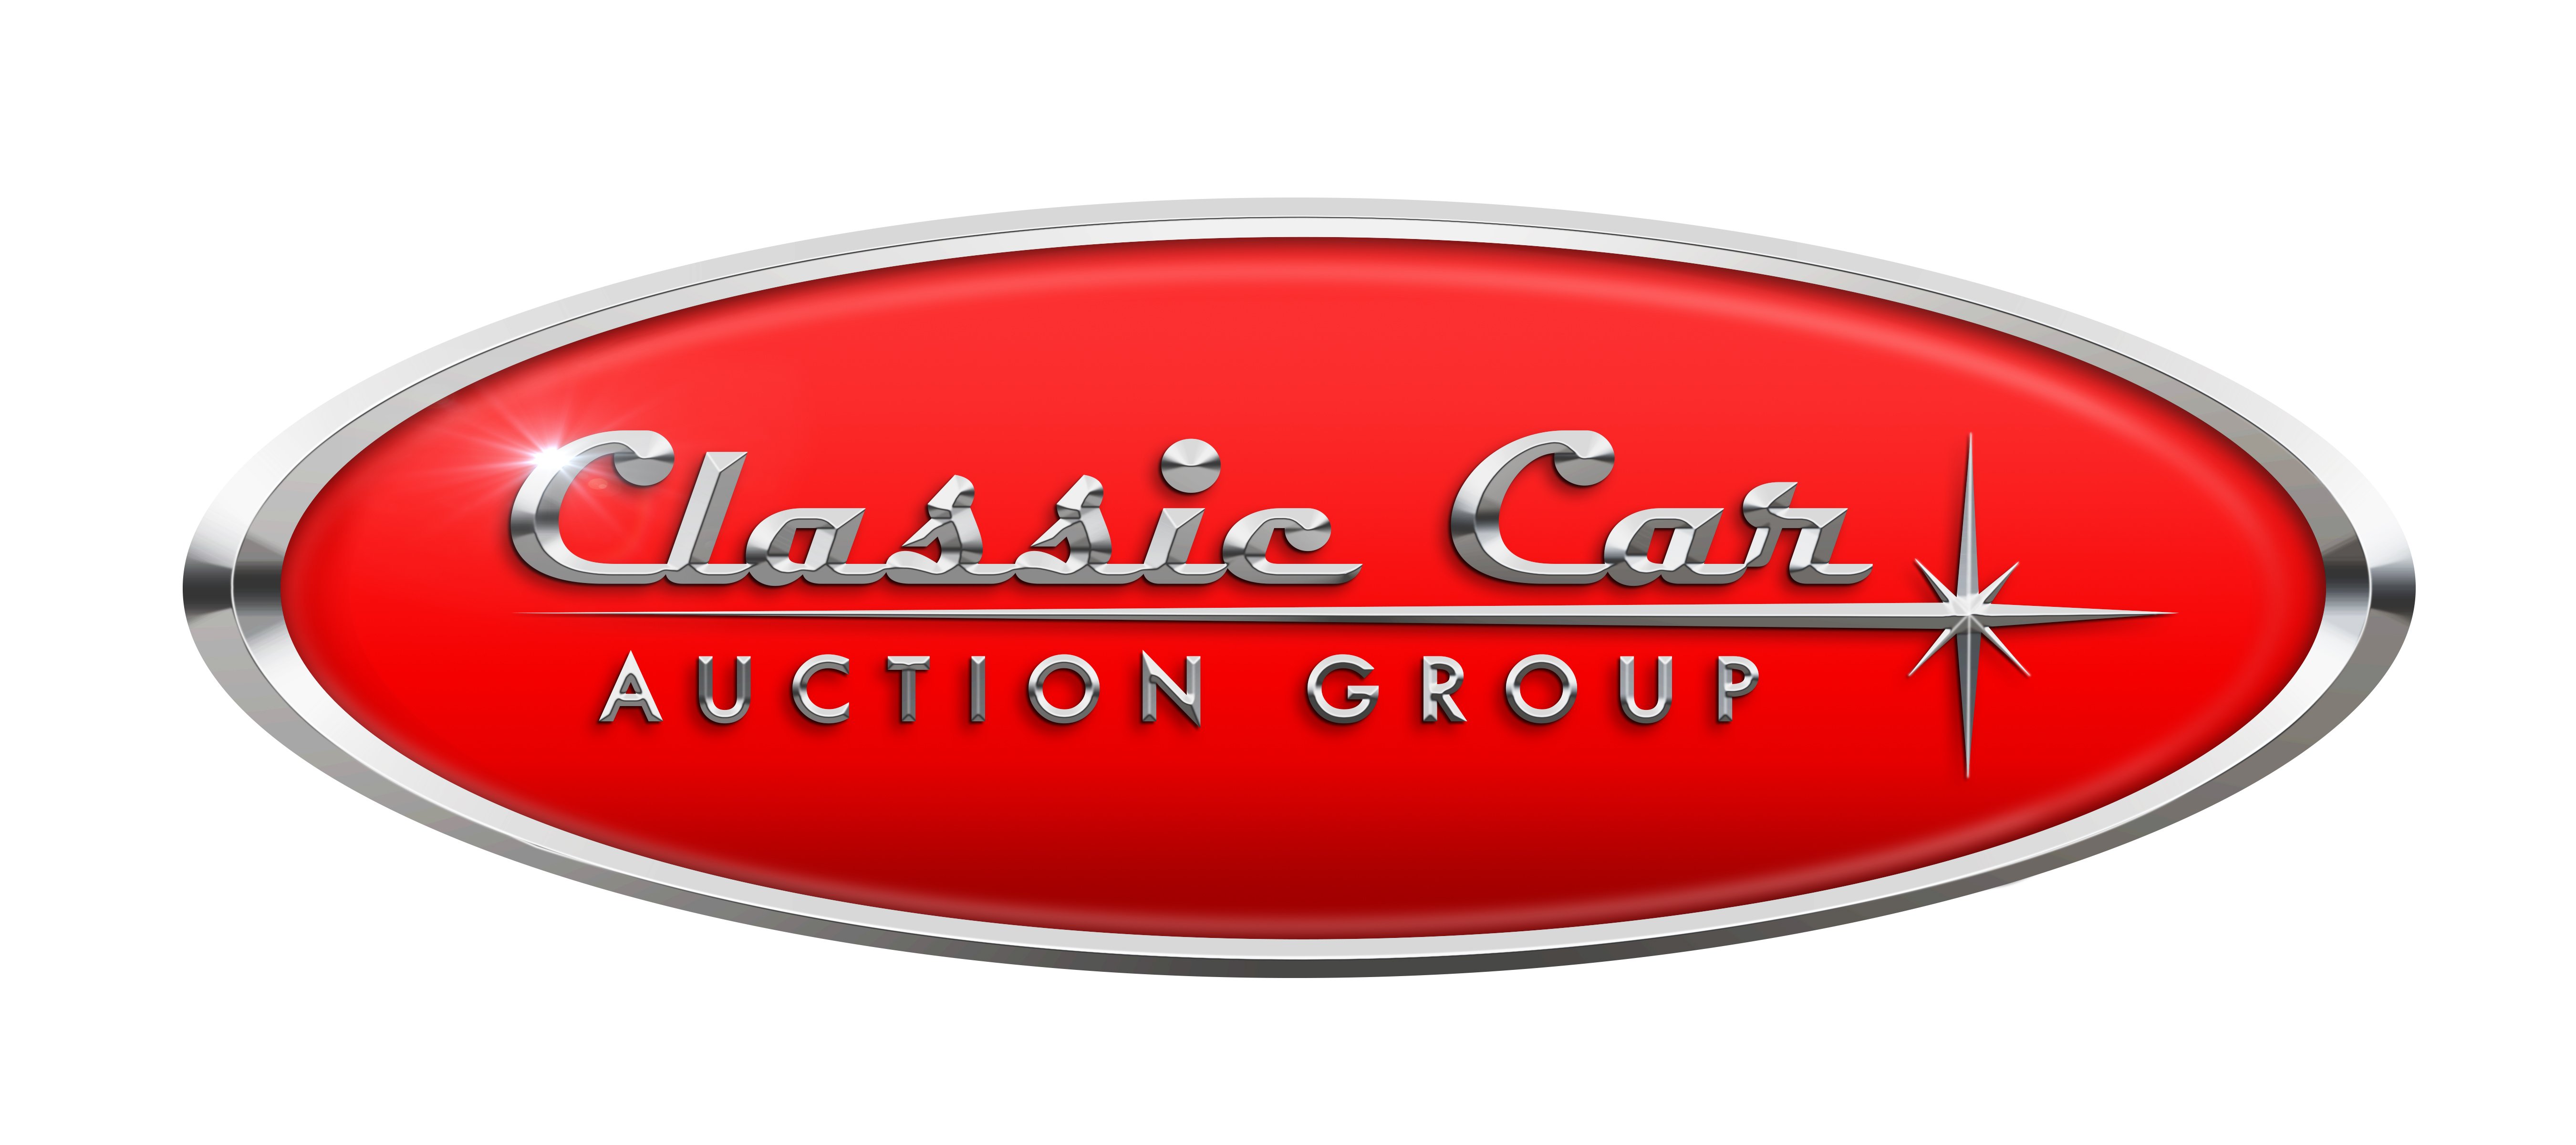 2nd Annual Sioux Falls Classic Car Auction